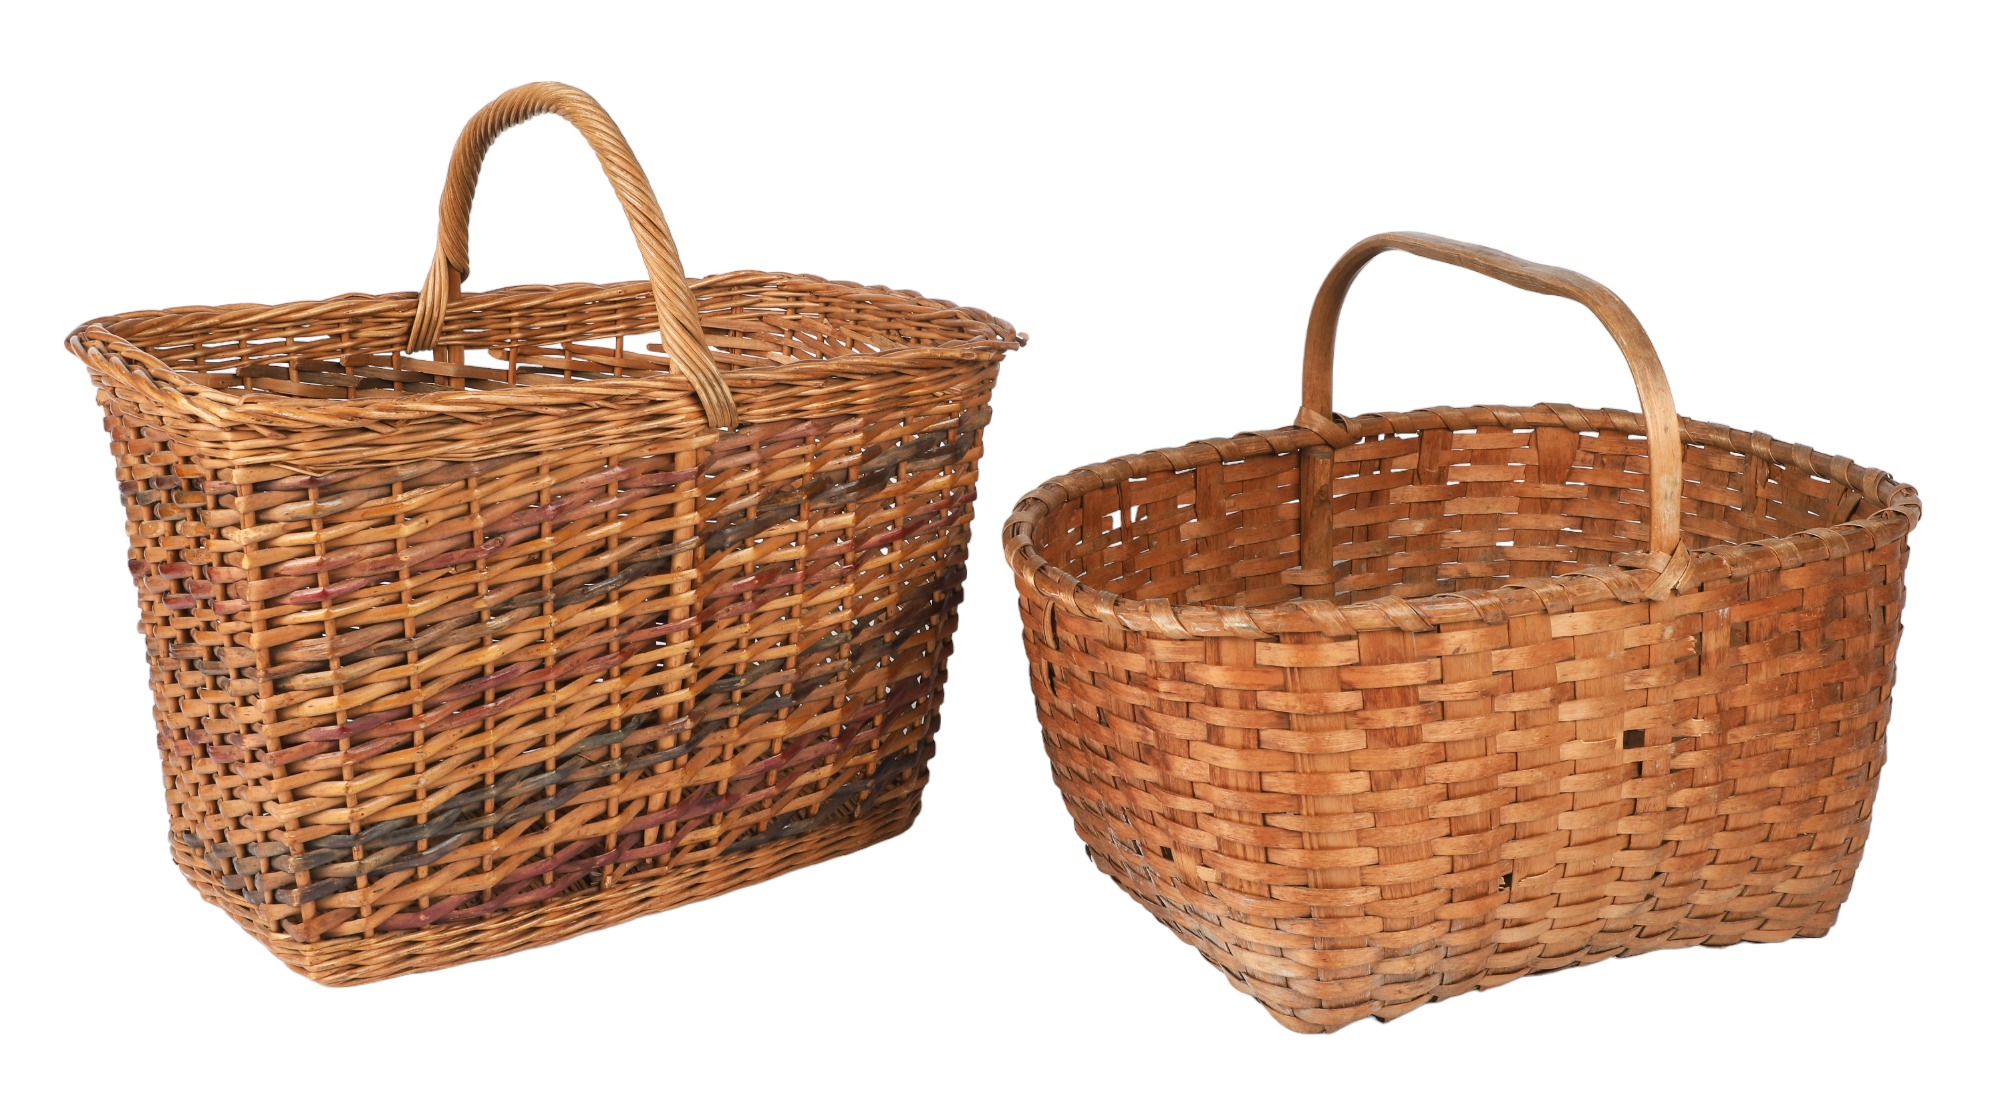  2 Rectangular Baskets wicker 3ca524